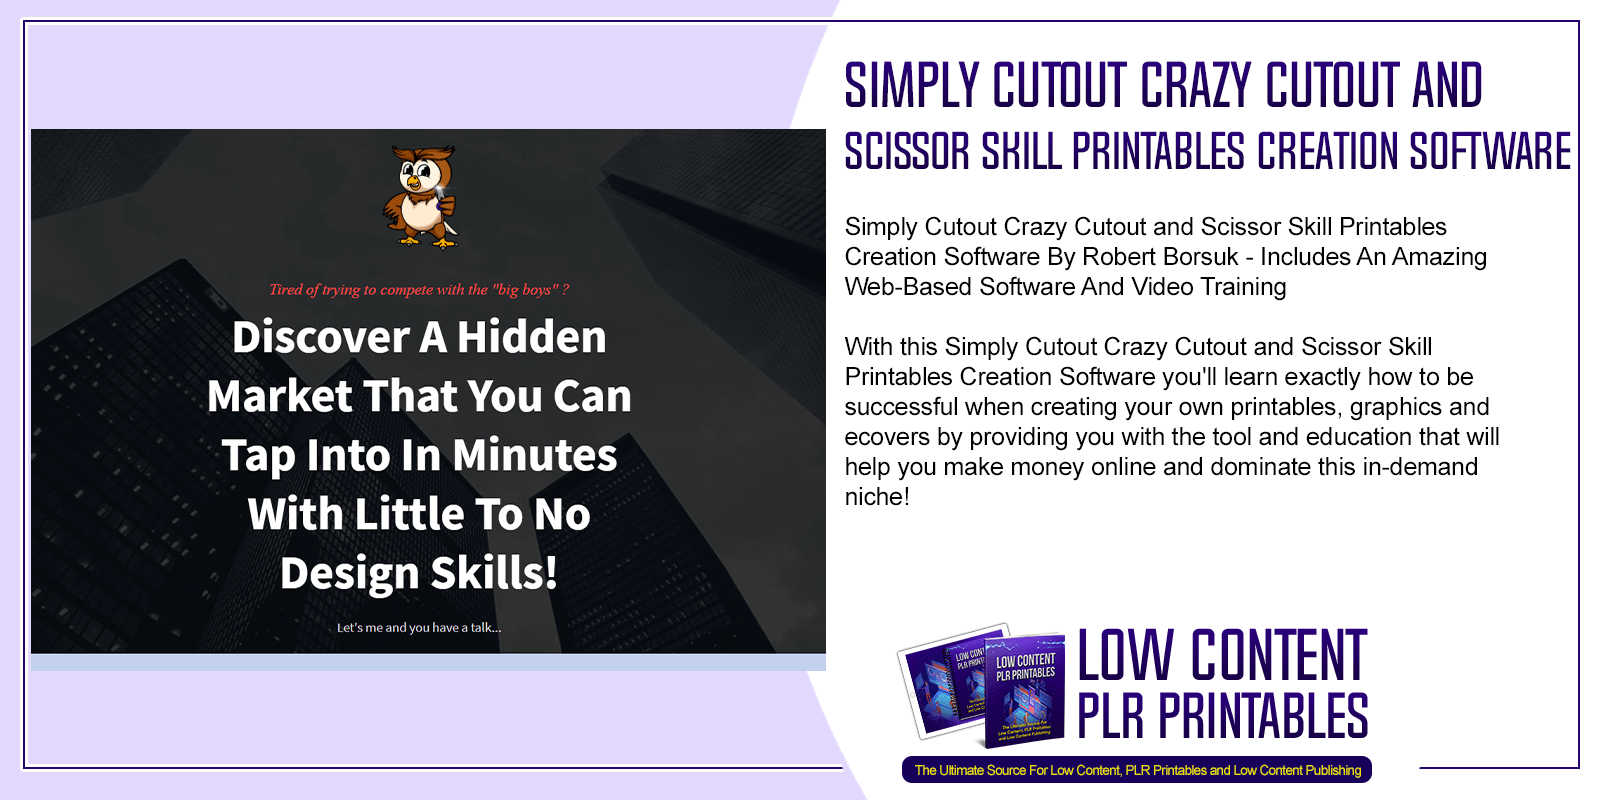 Simply Cutout Crazy Cutout and Scissor Skill Printables Creation Software